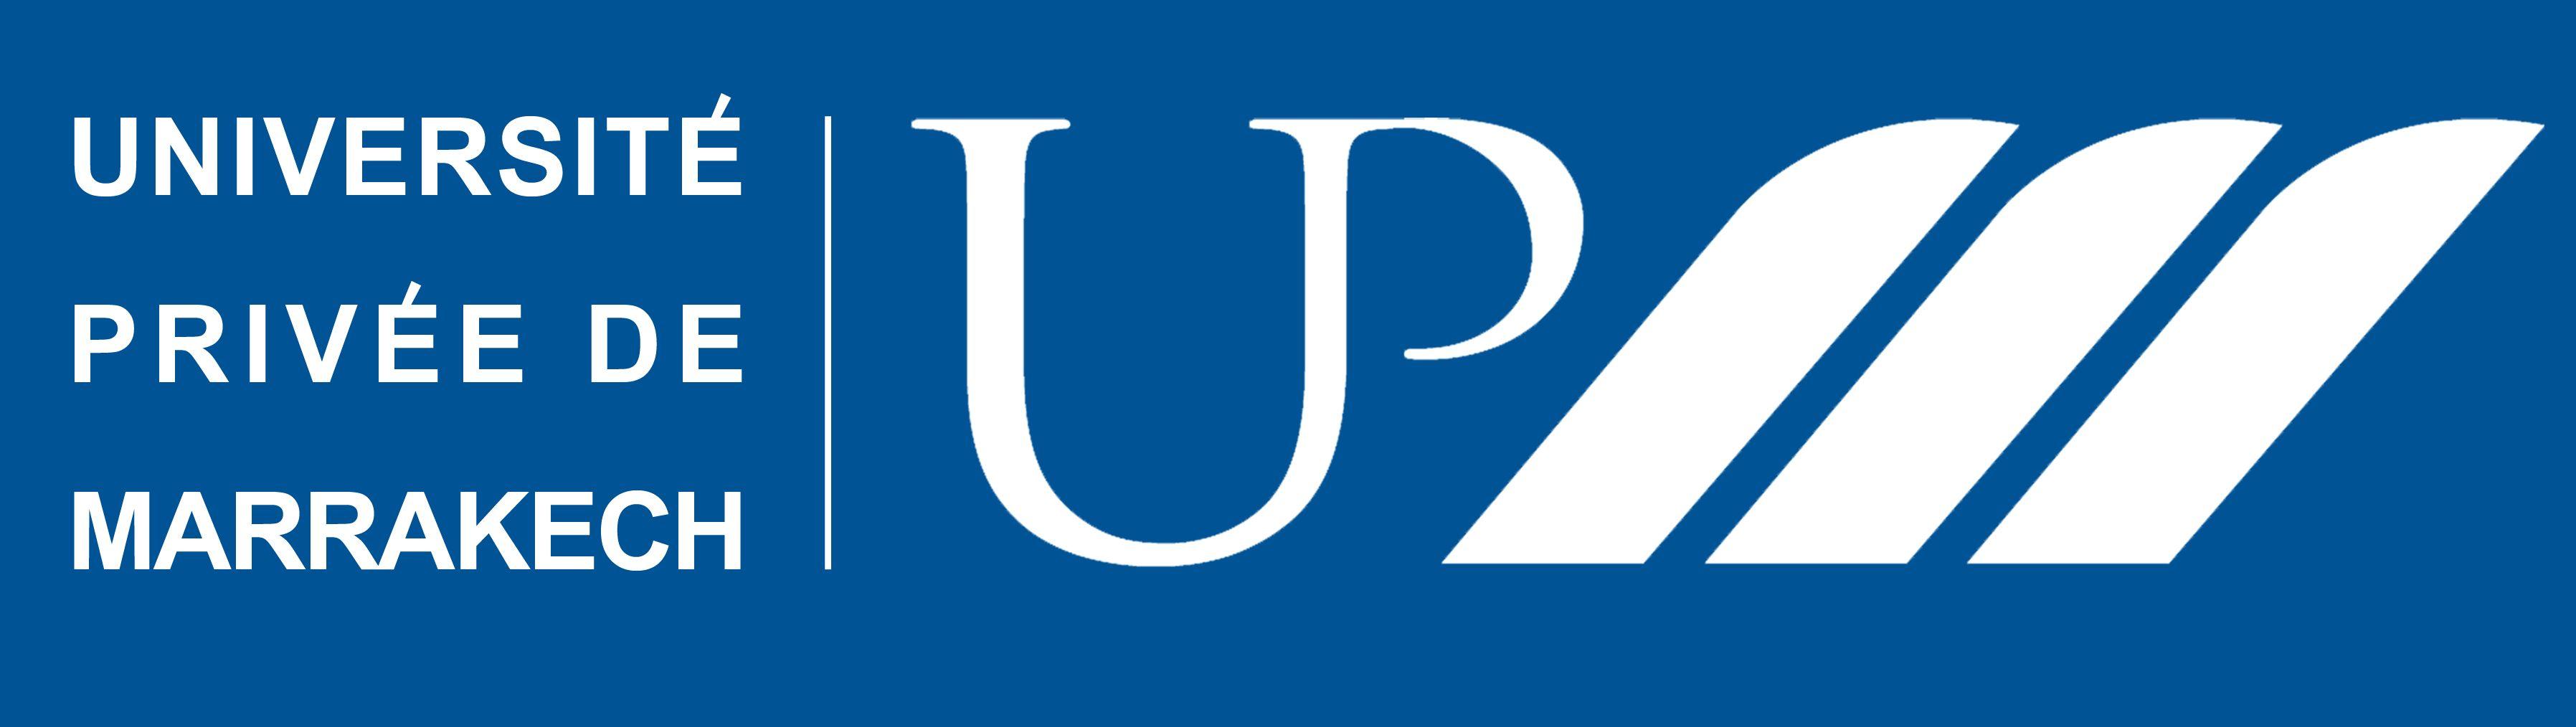 UPM Logo - File:LOGO UPM - UNIVERSITE PRIVEE DE MARRAKECH.jpg - Wikimedia Commons